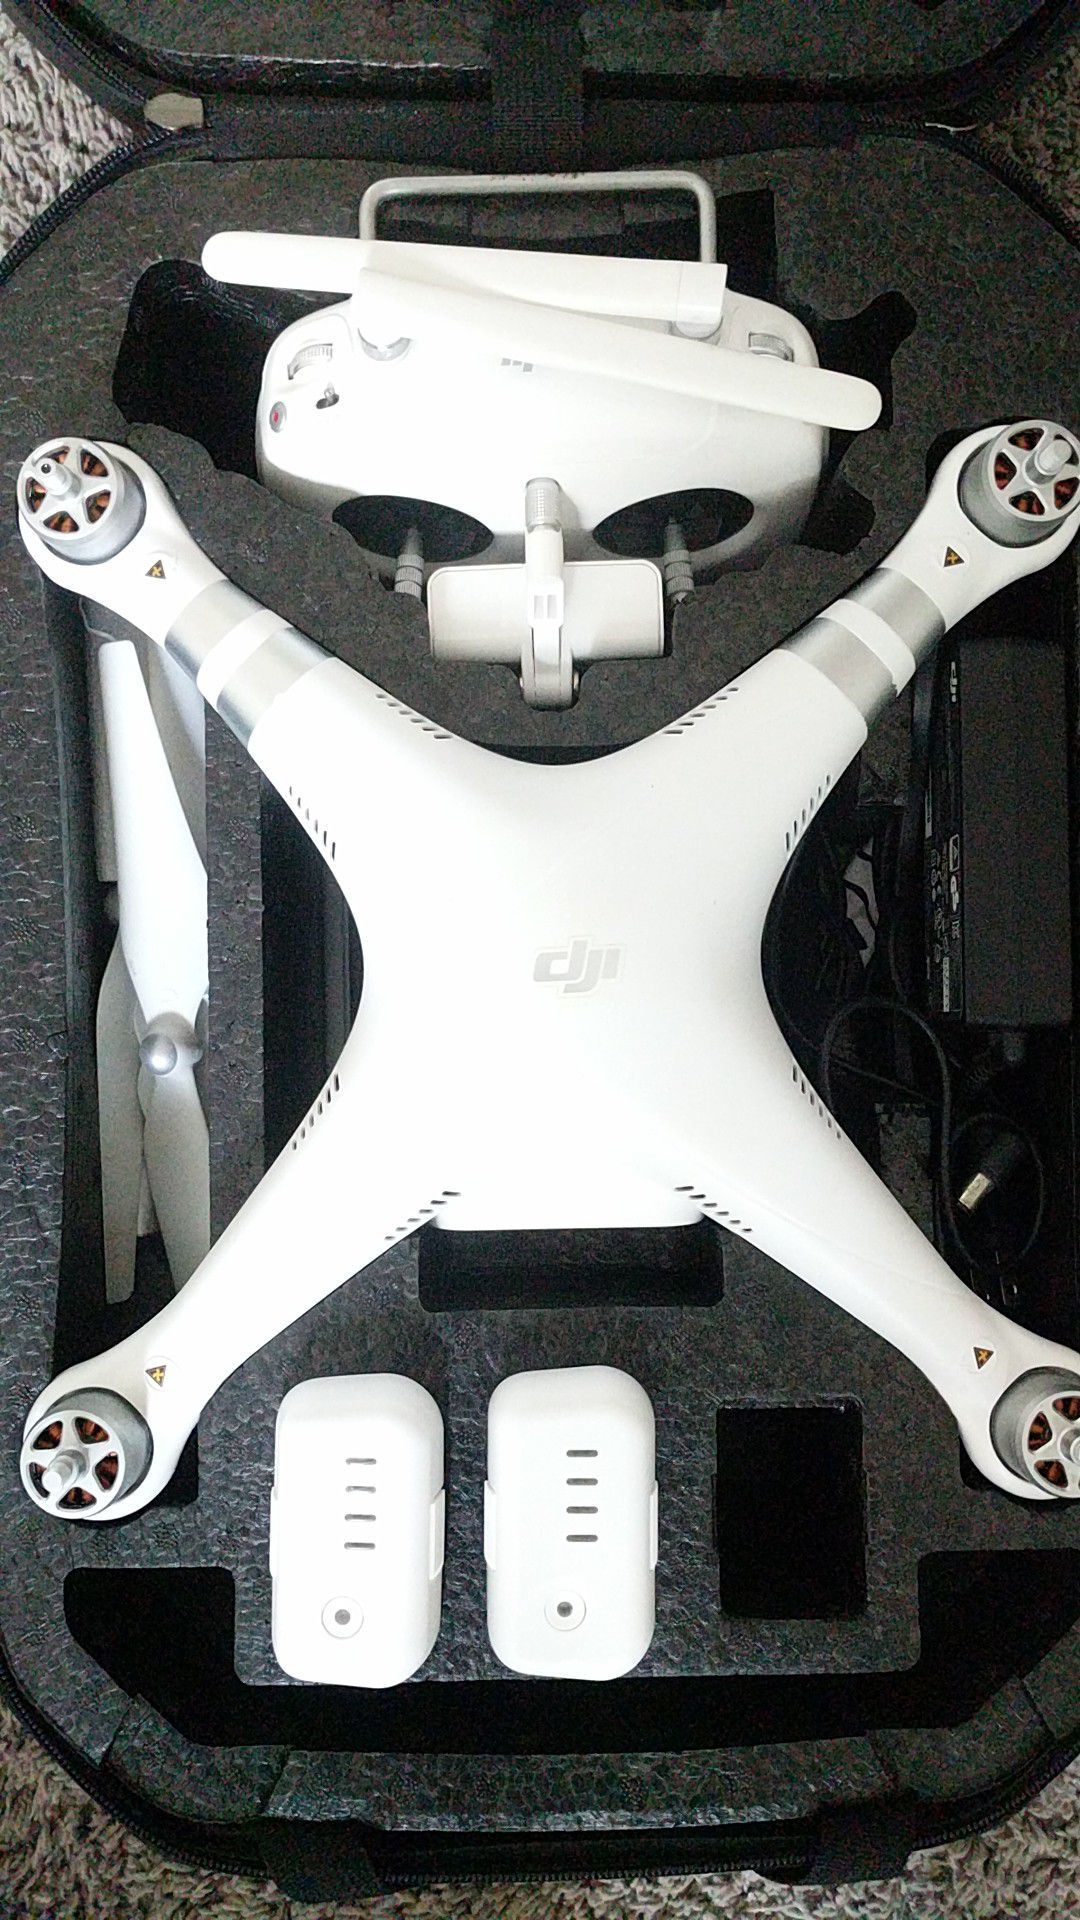 DJI Phantom 3 Advanced Drone - Still available!